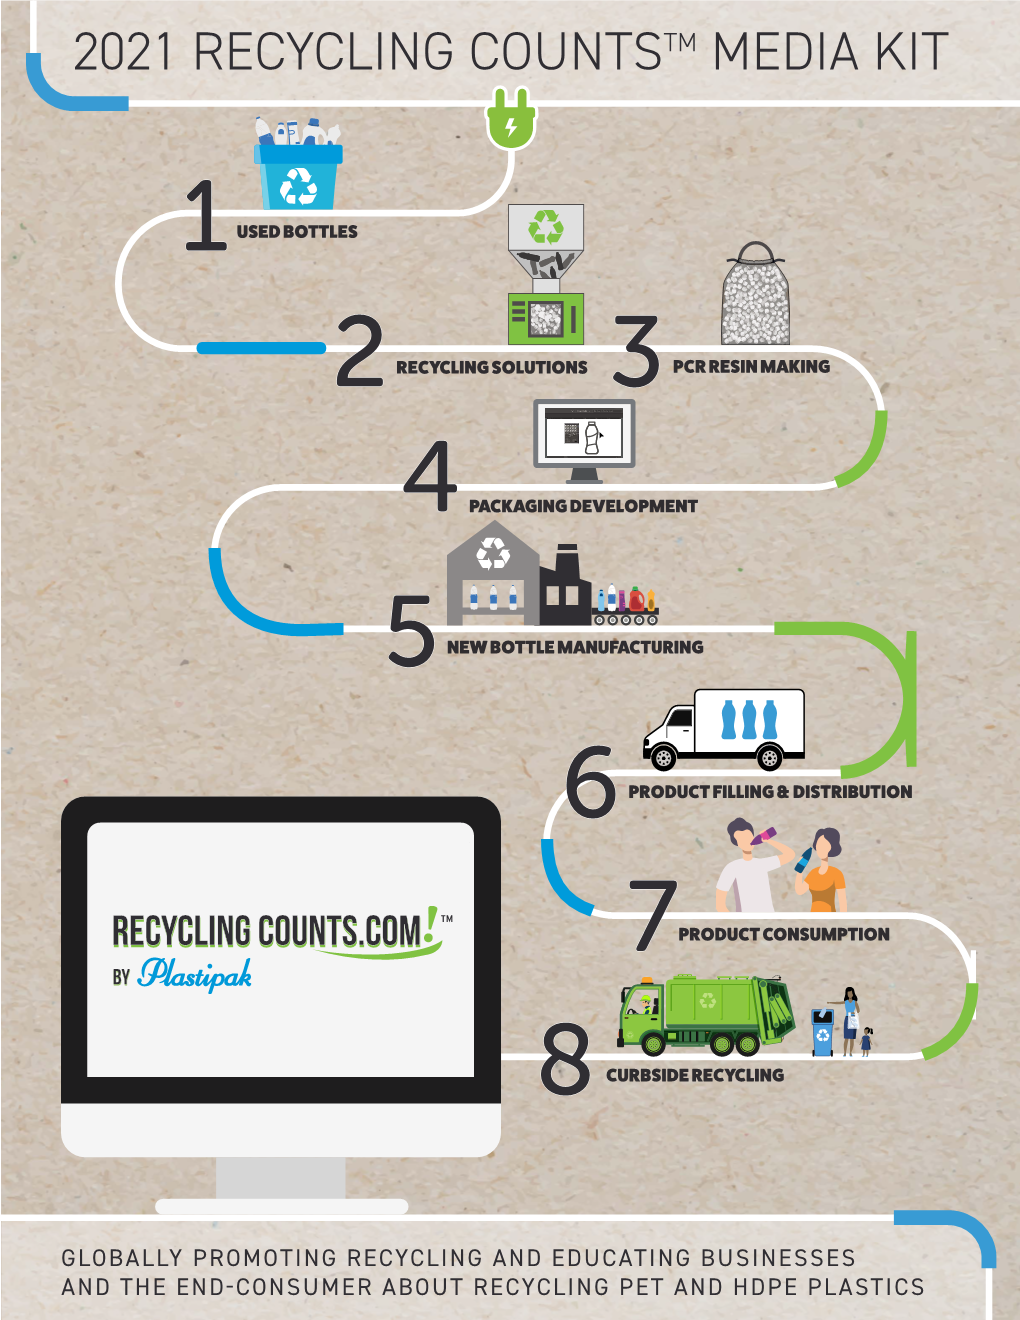 2021 Recycling Countstm Media Kit